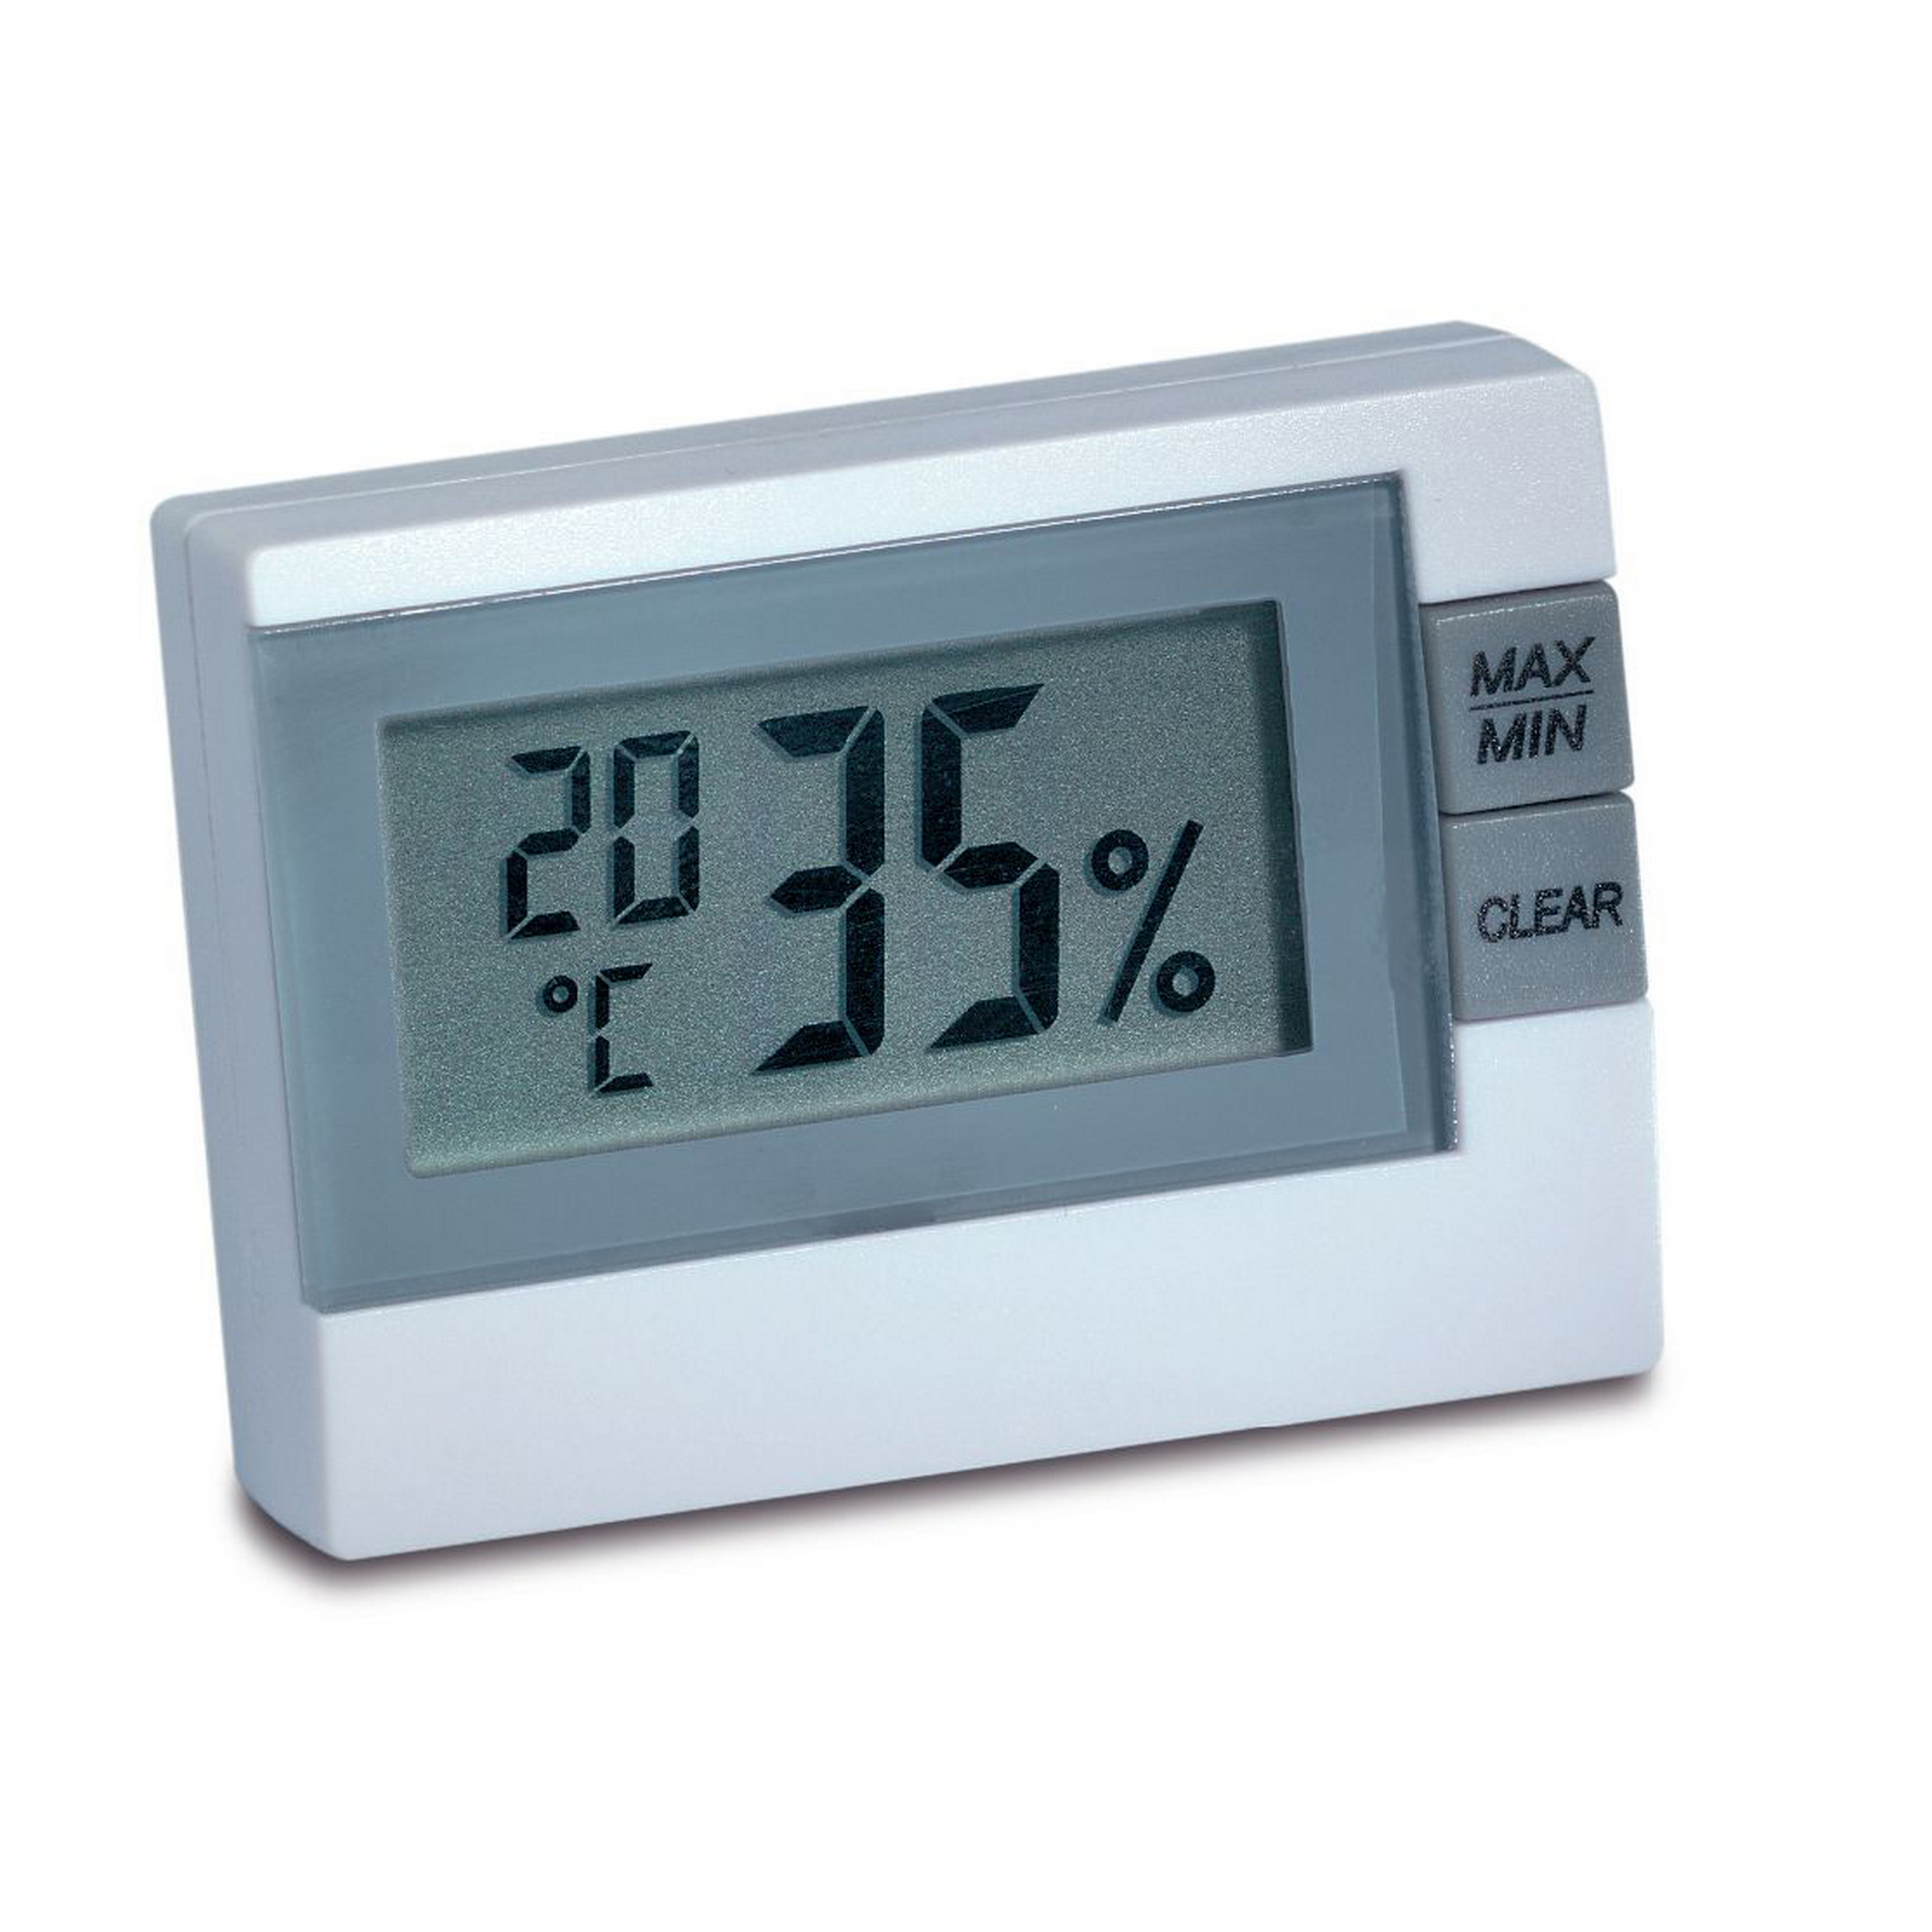 Thermo- und Hygrometer Kunststoff weiß 5,4 x 1,6 x 3,9 cm + product picture